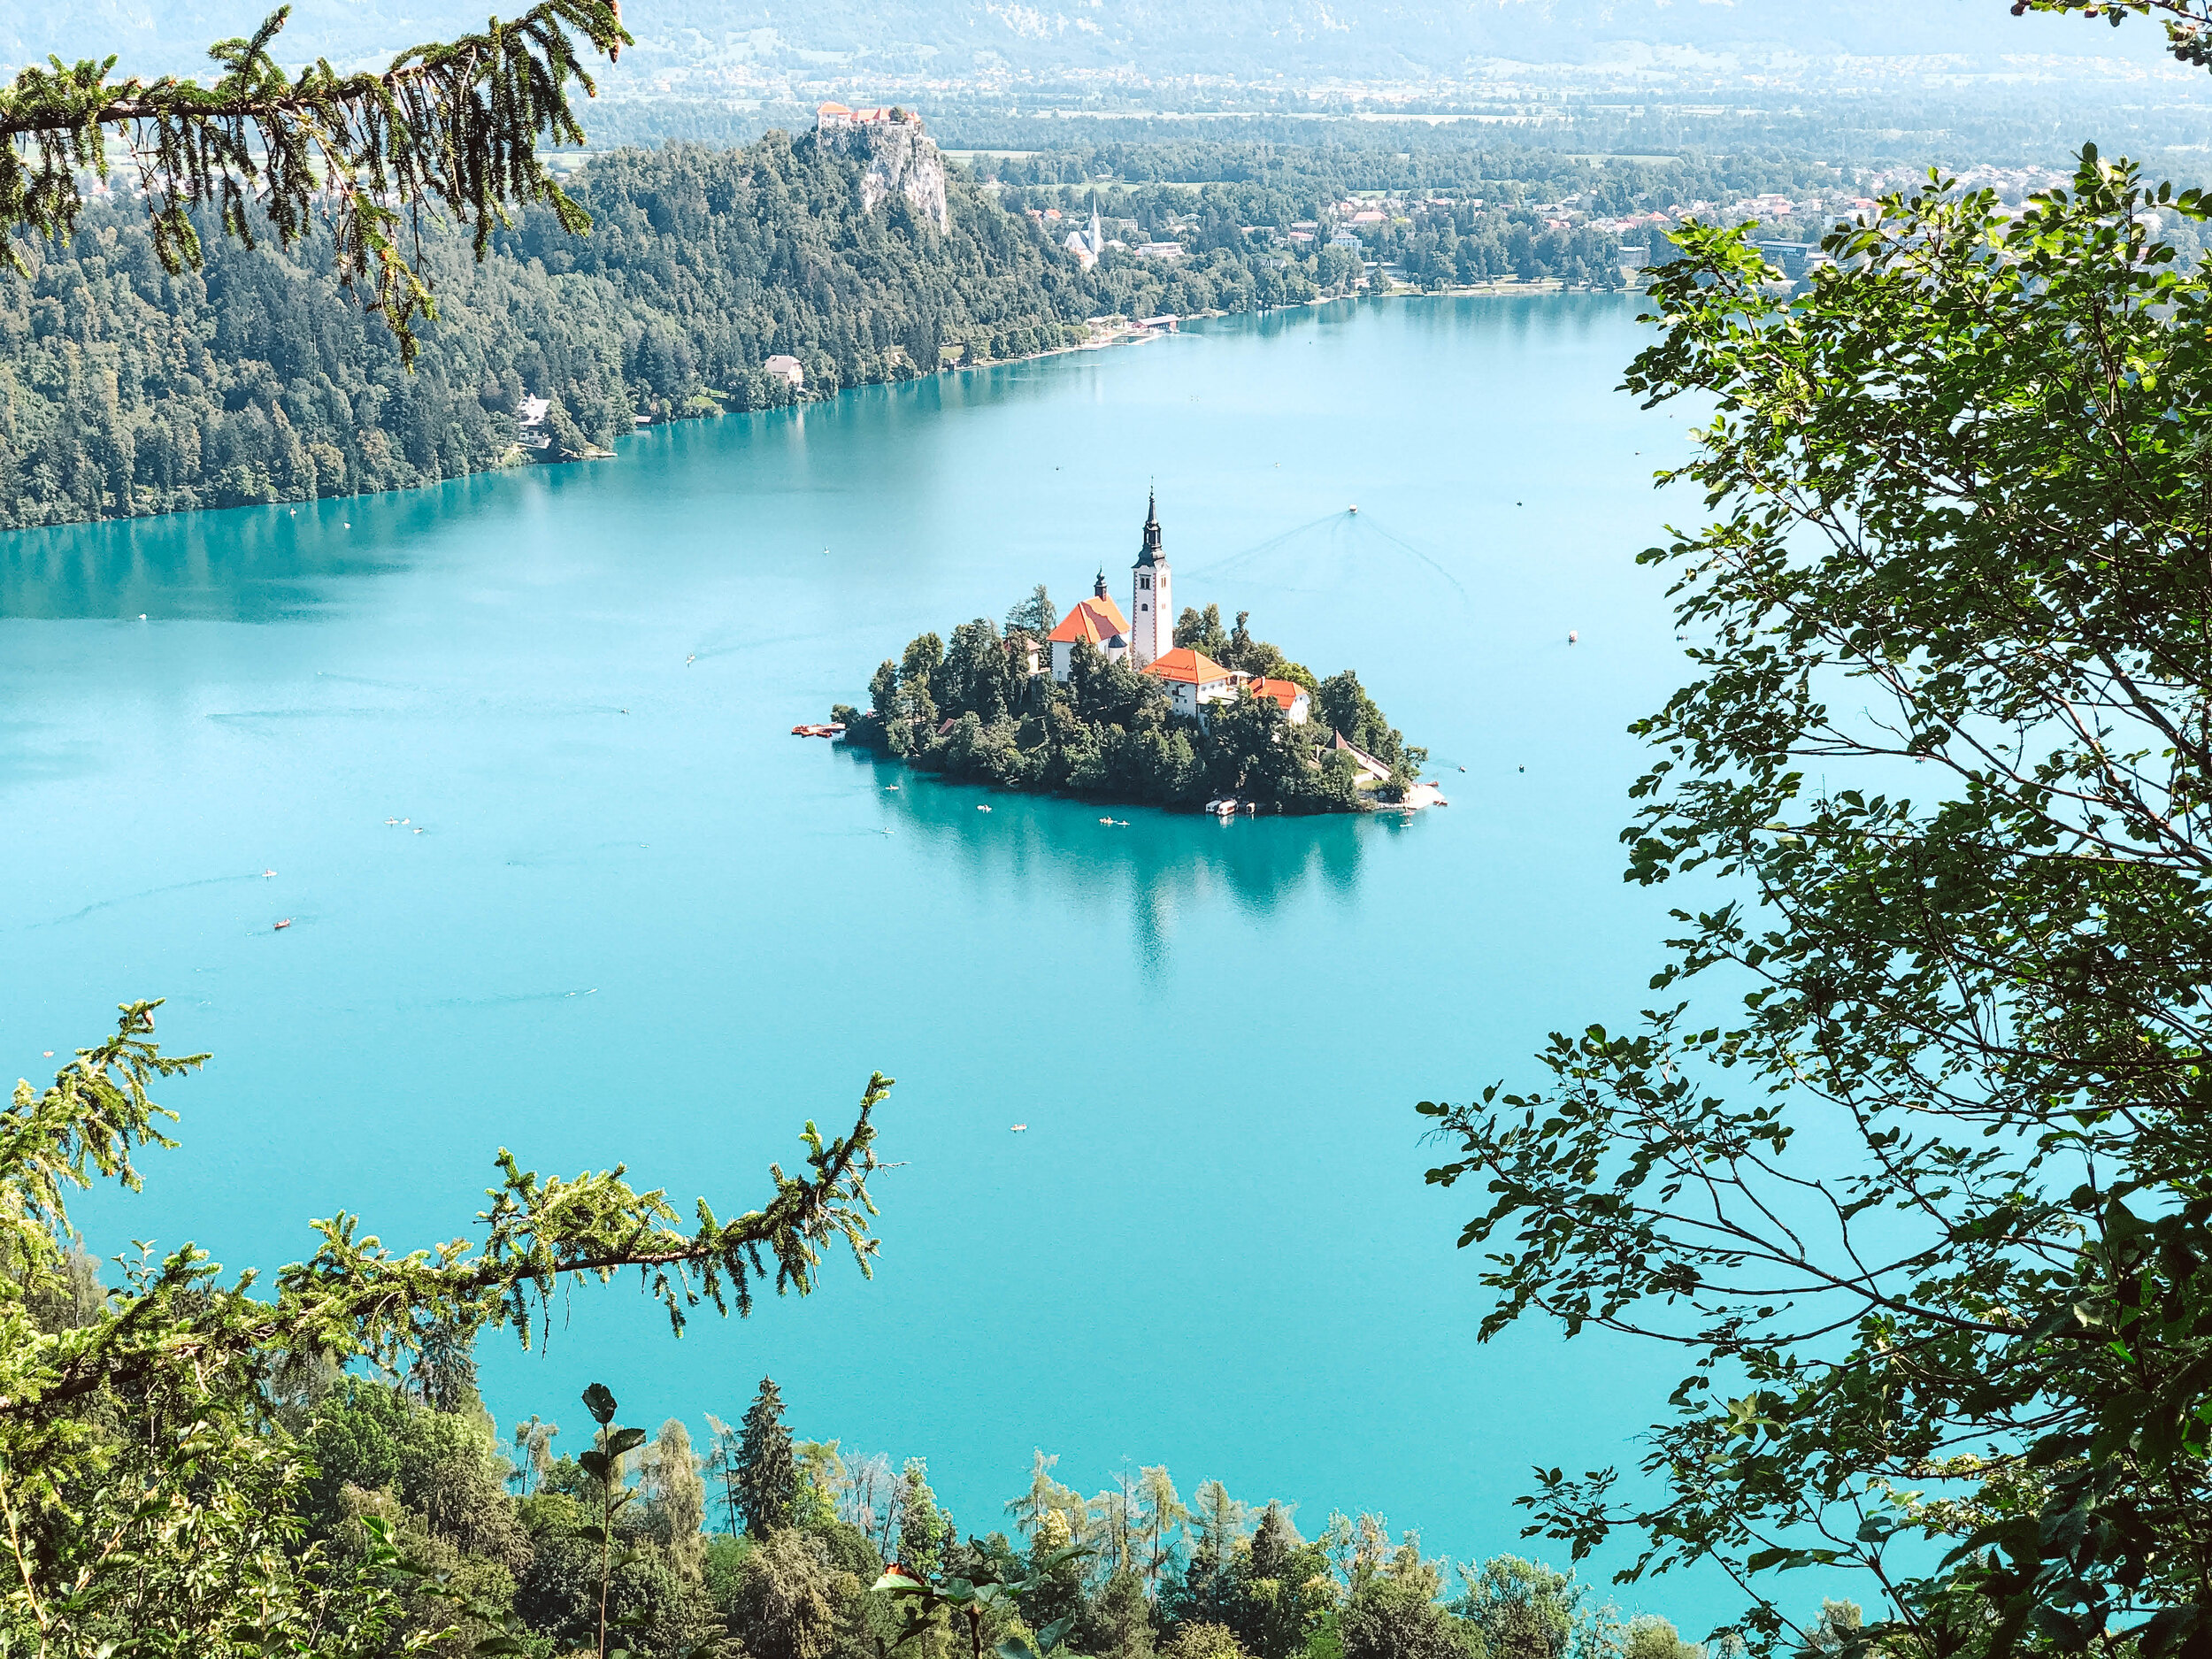 Slovenia Lake Bled from Mala Osojnica in summer.jpg